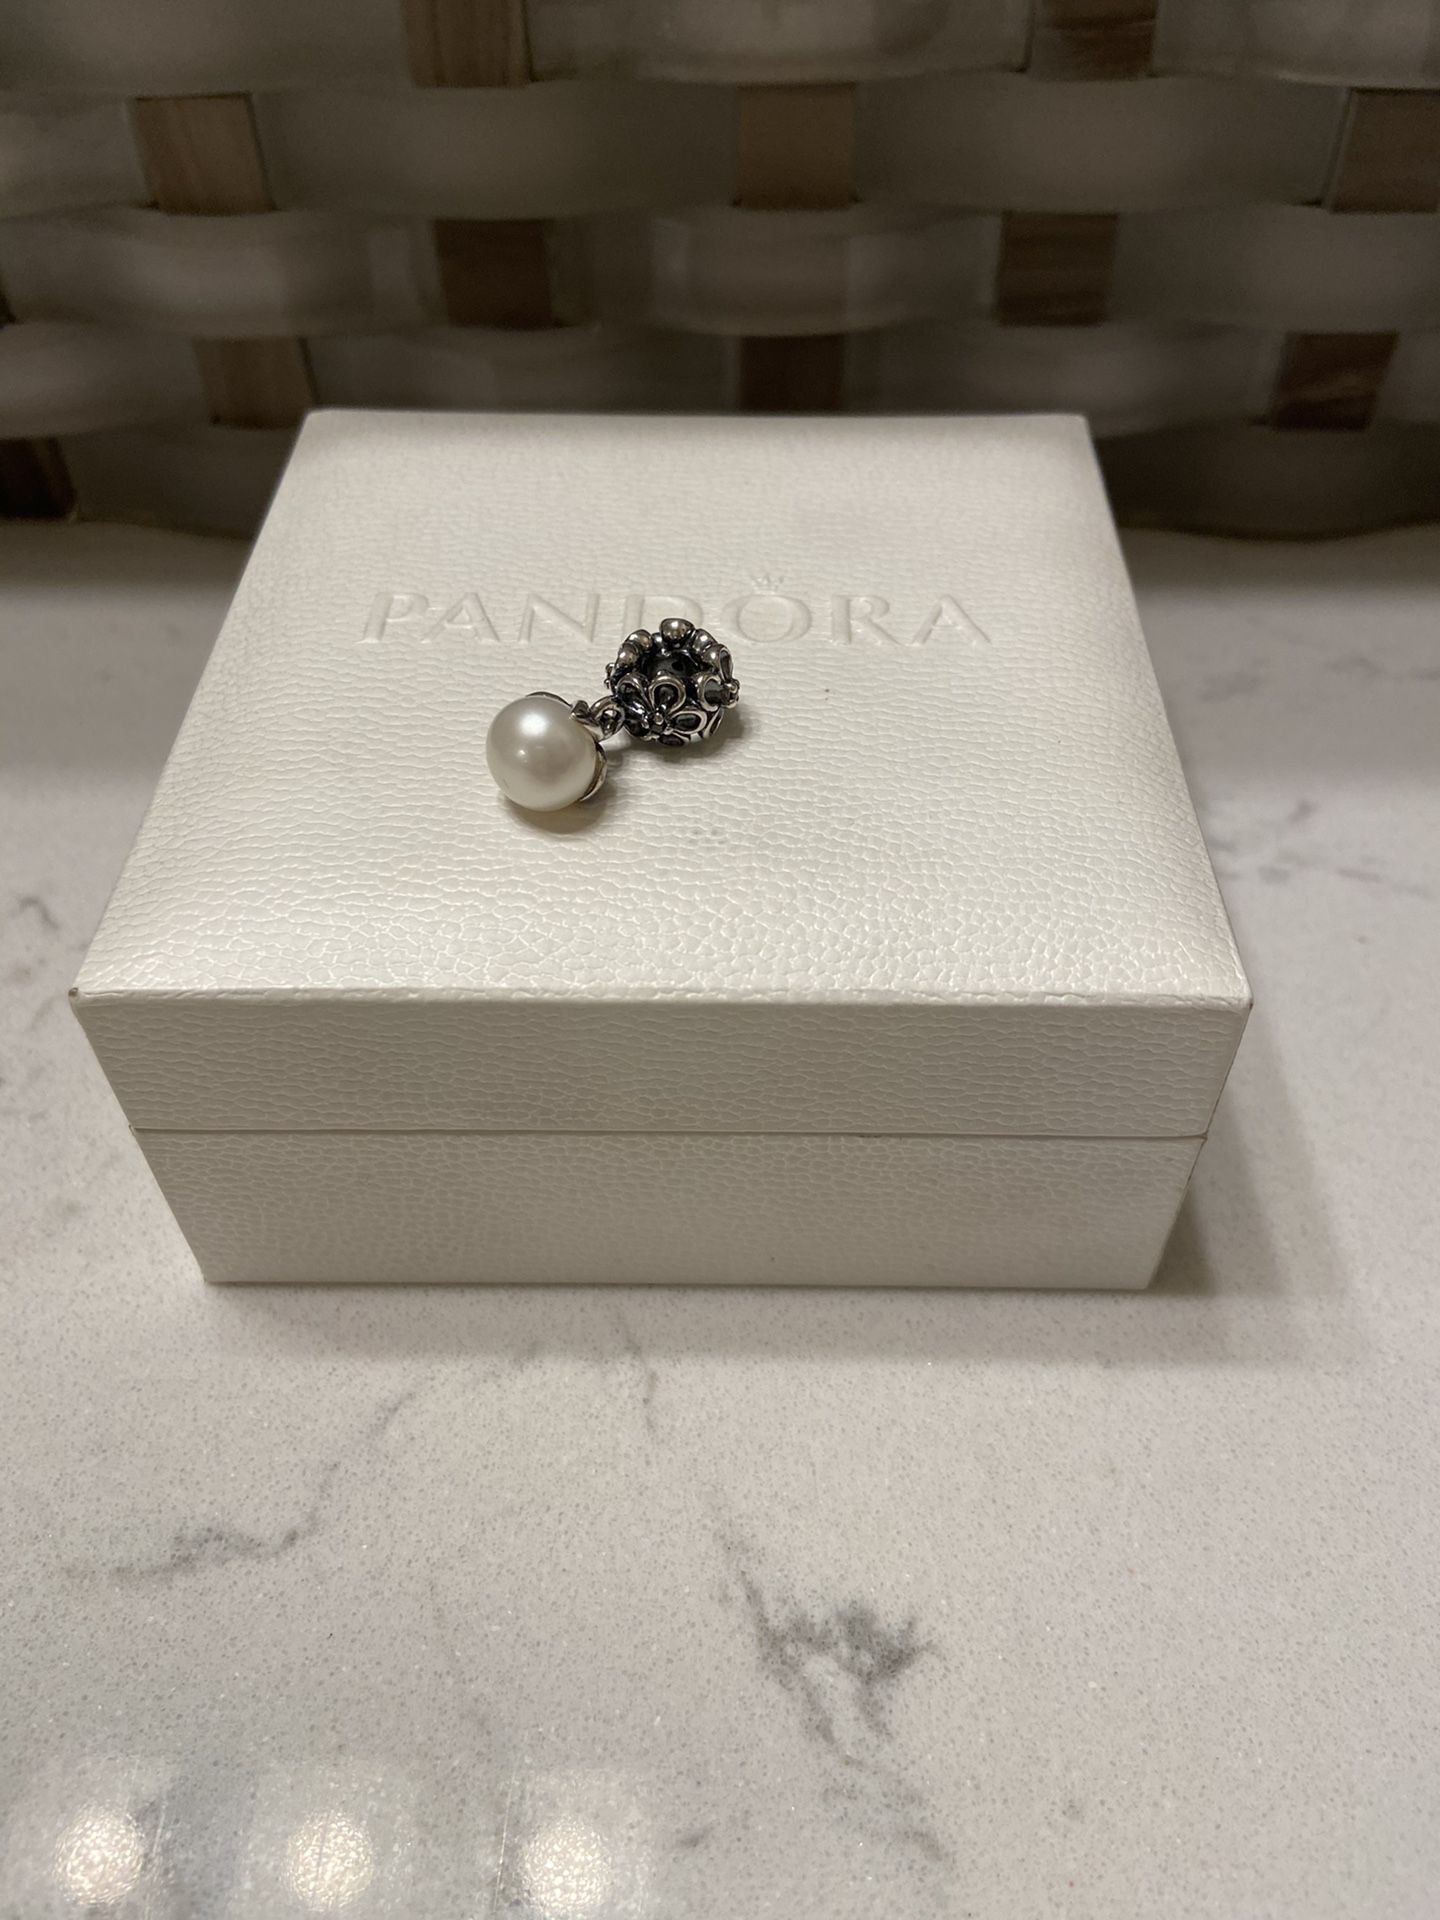 Pandora dangle pearl charm